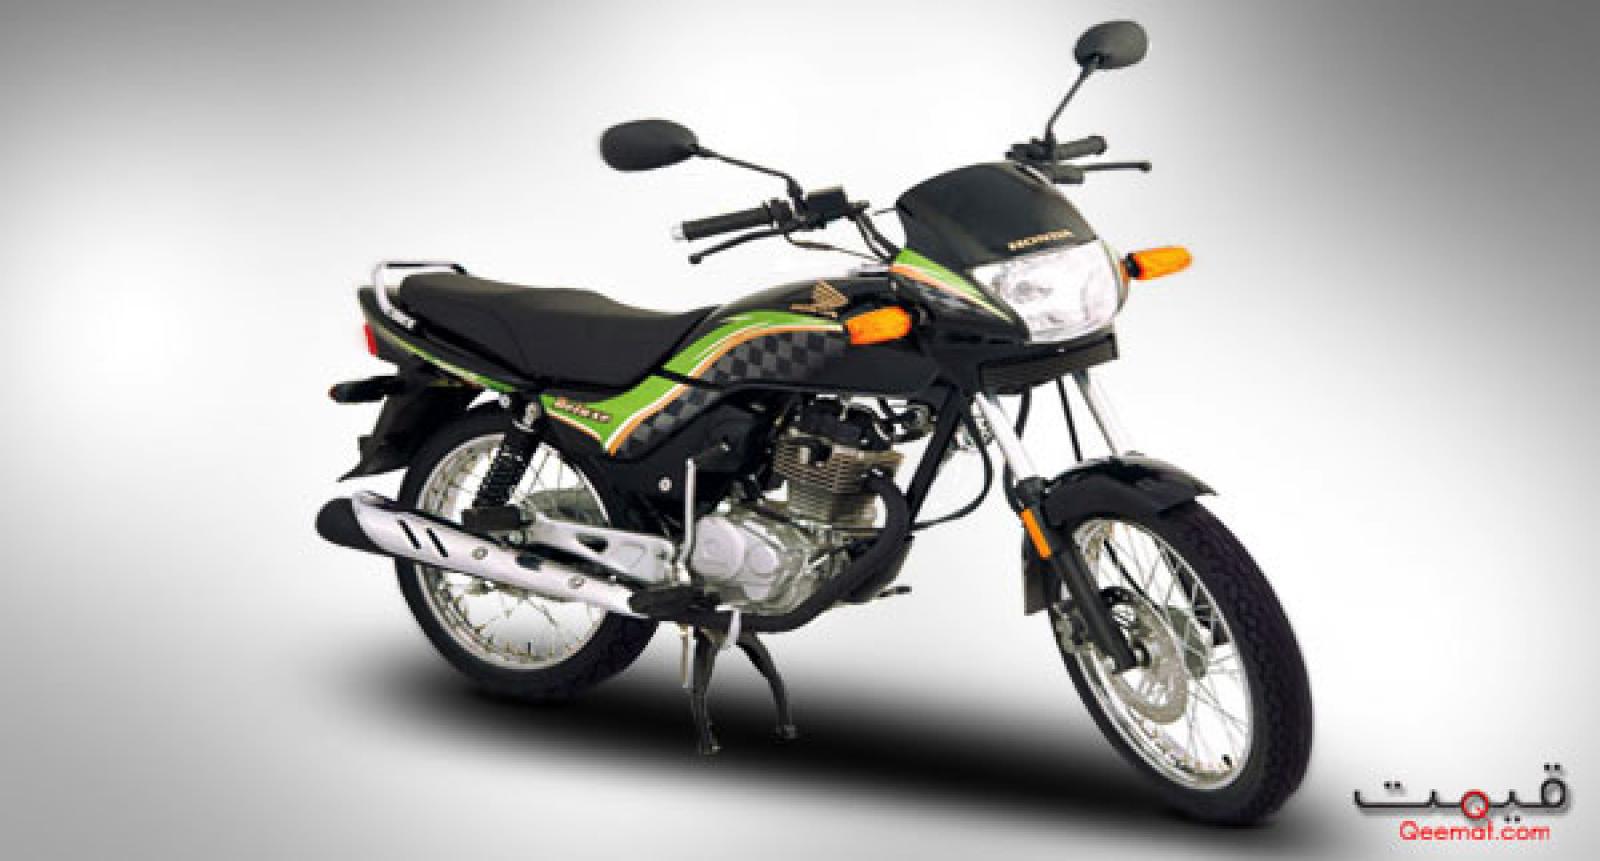 125 Cc Honda Cg 125 New Model 2020 Price In Pakistan